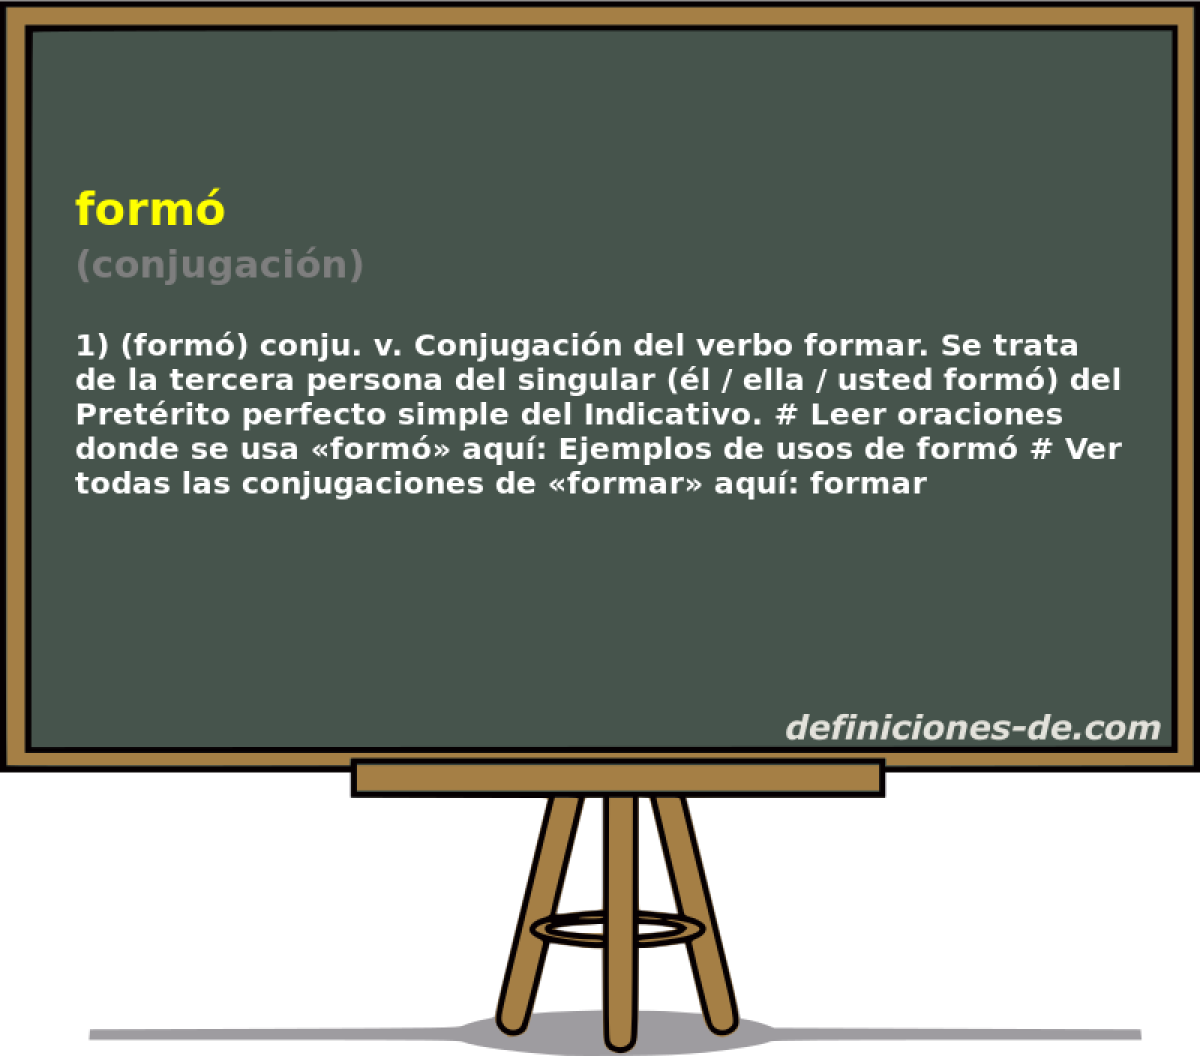 form (conjugacin)